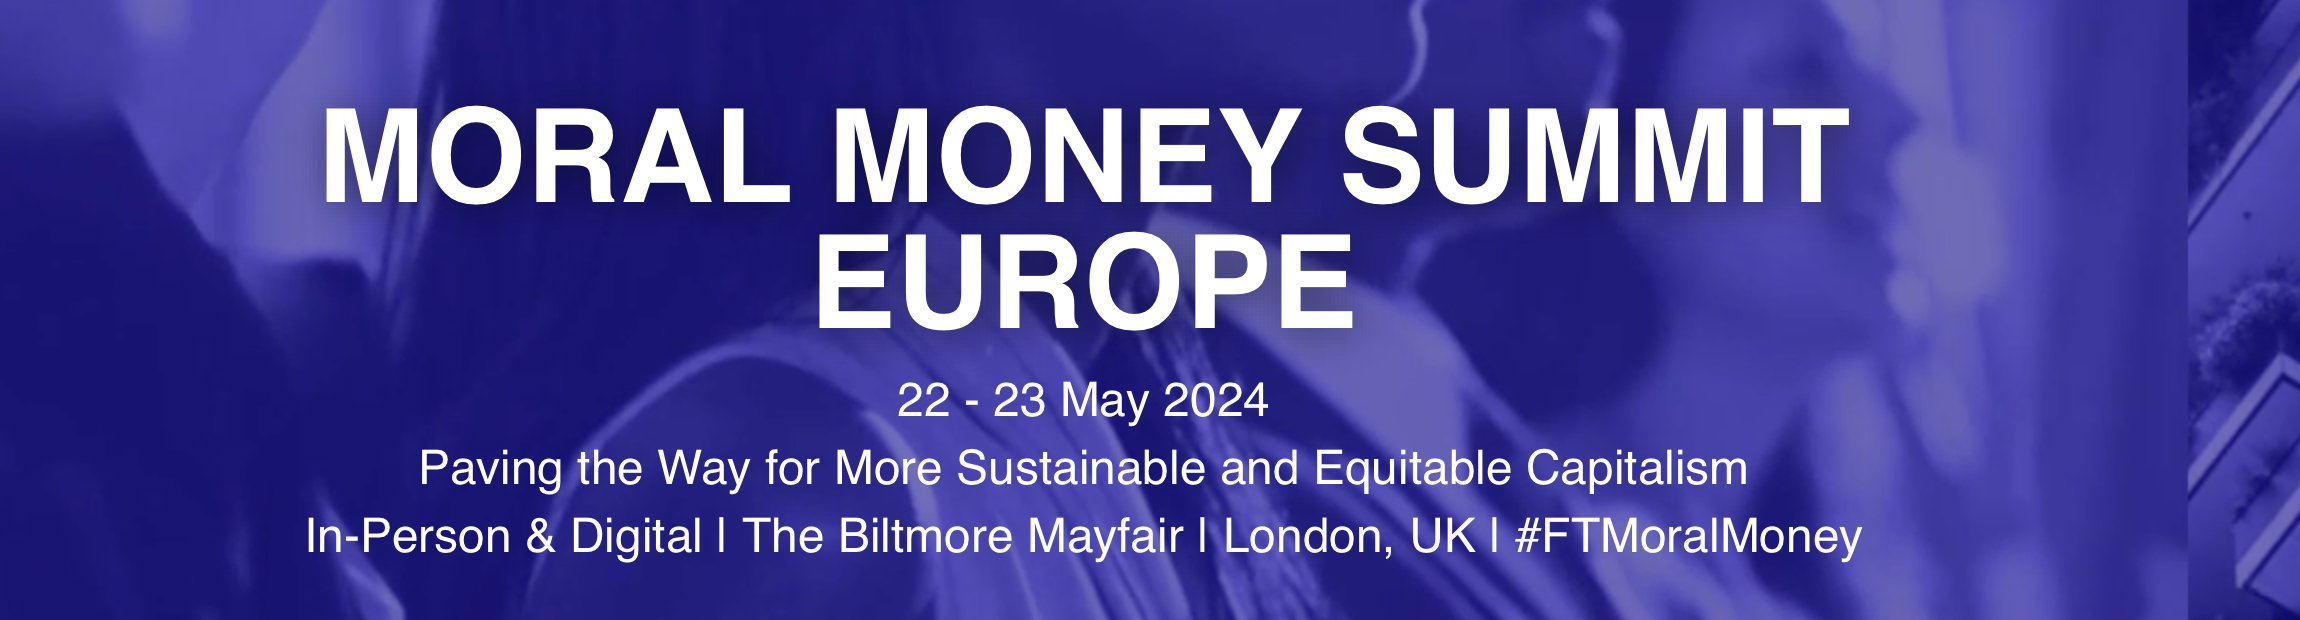 Moral Money Summit Europe 2024